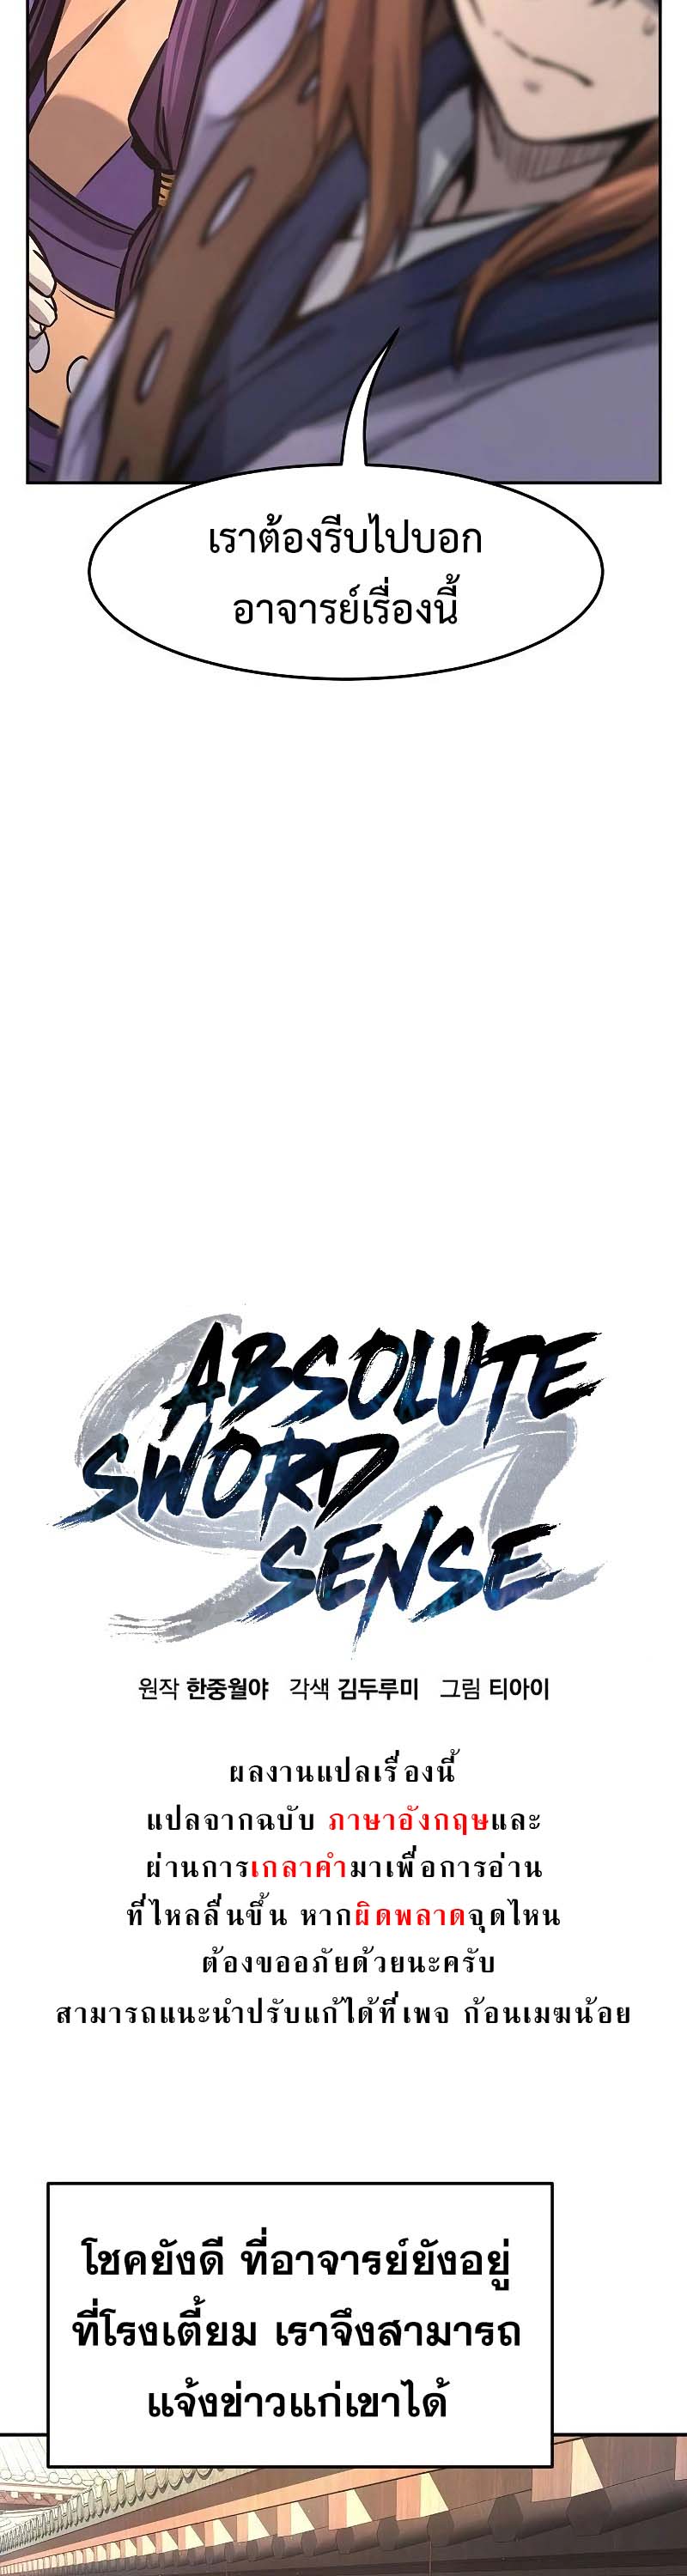 Absolute Sword Sense 72 (43)